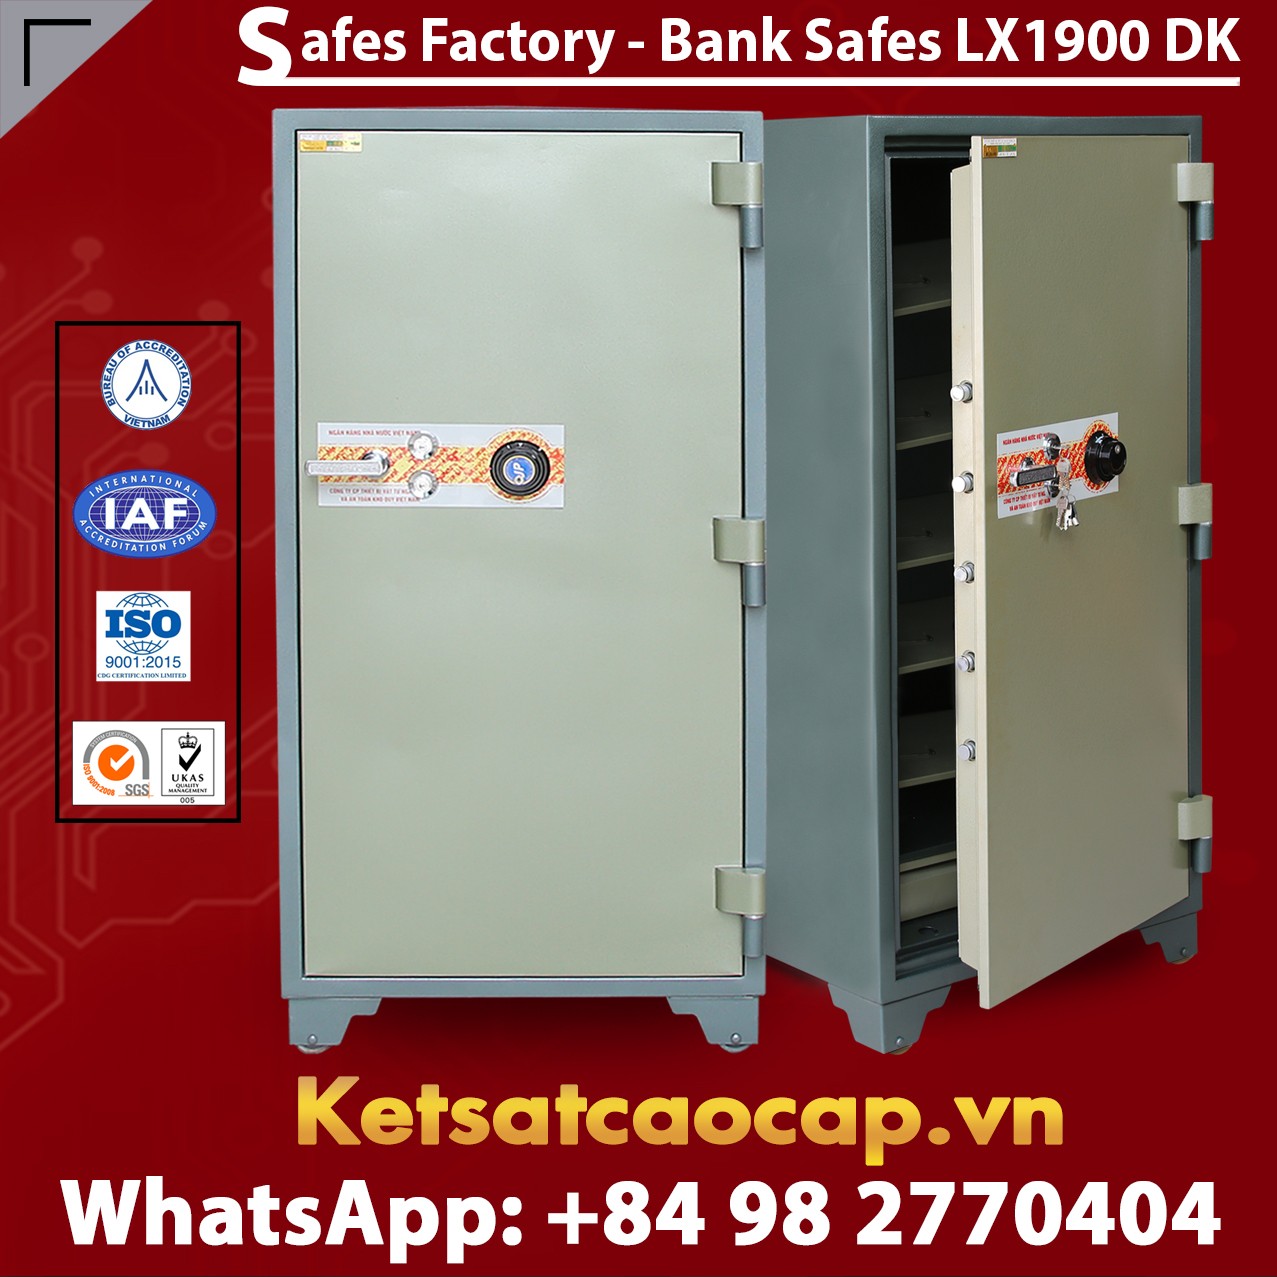 Bank Safes LX1900 DK Strong-High Quality Bank Fire Resistant Safe Box